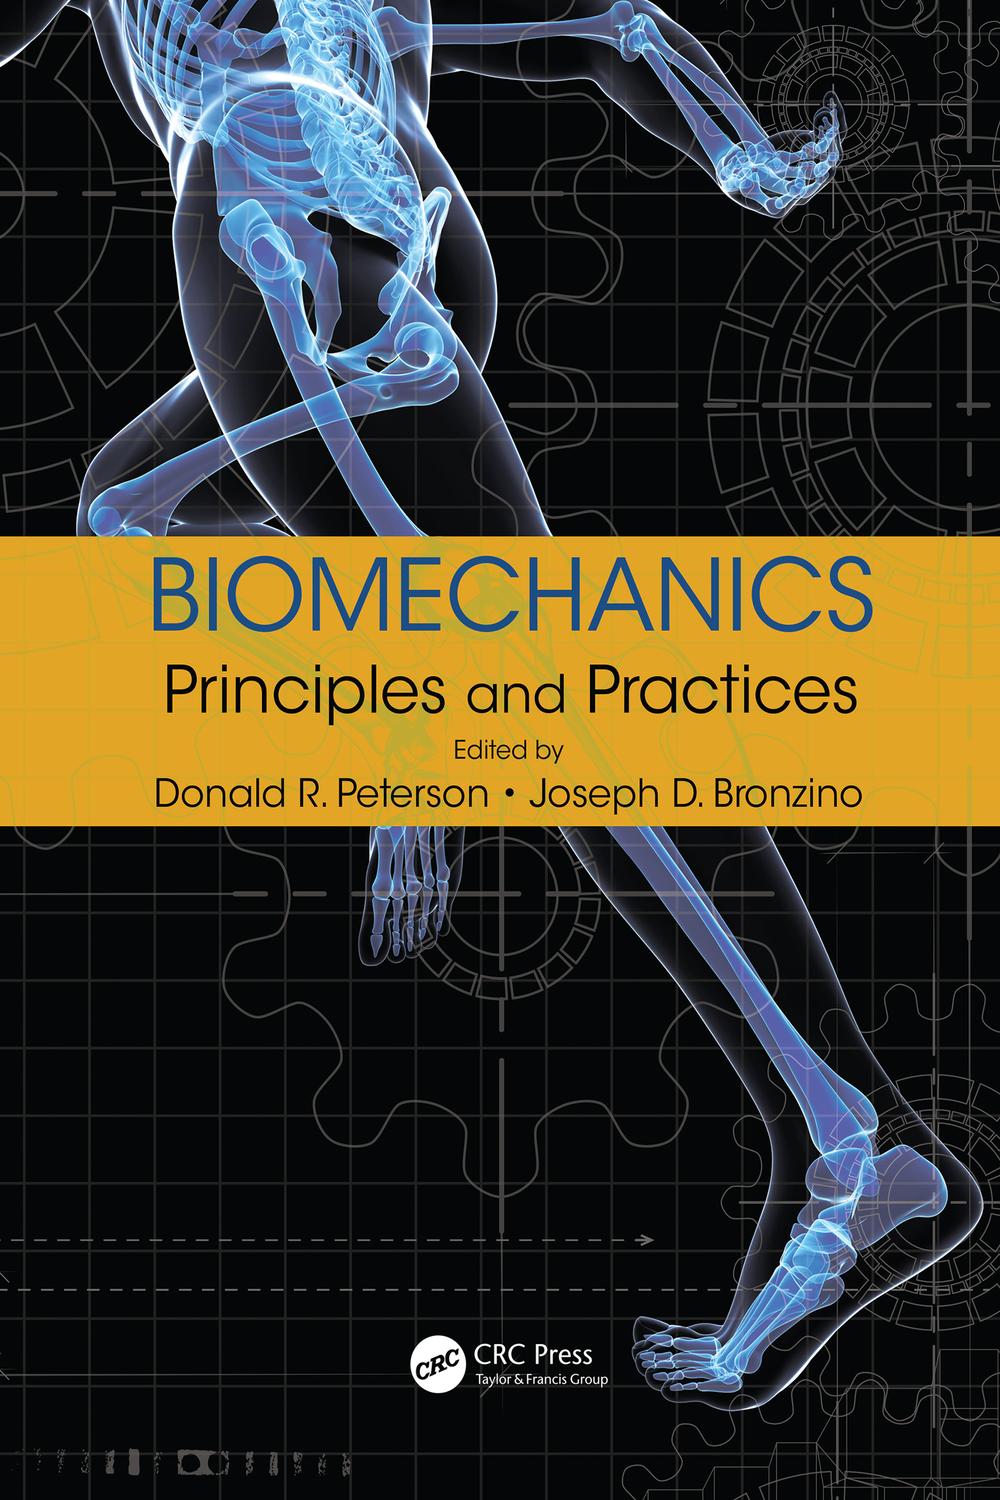 Biomechanics - Donald R. Peterson, Joseph D. Bronzino